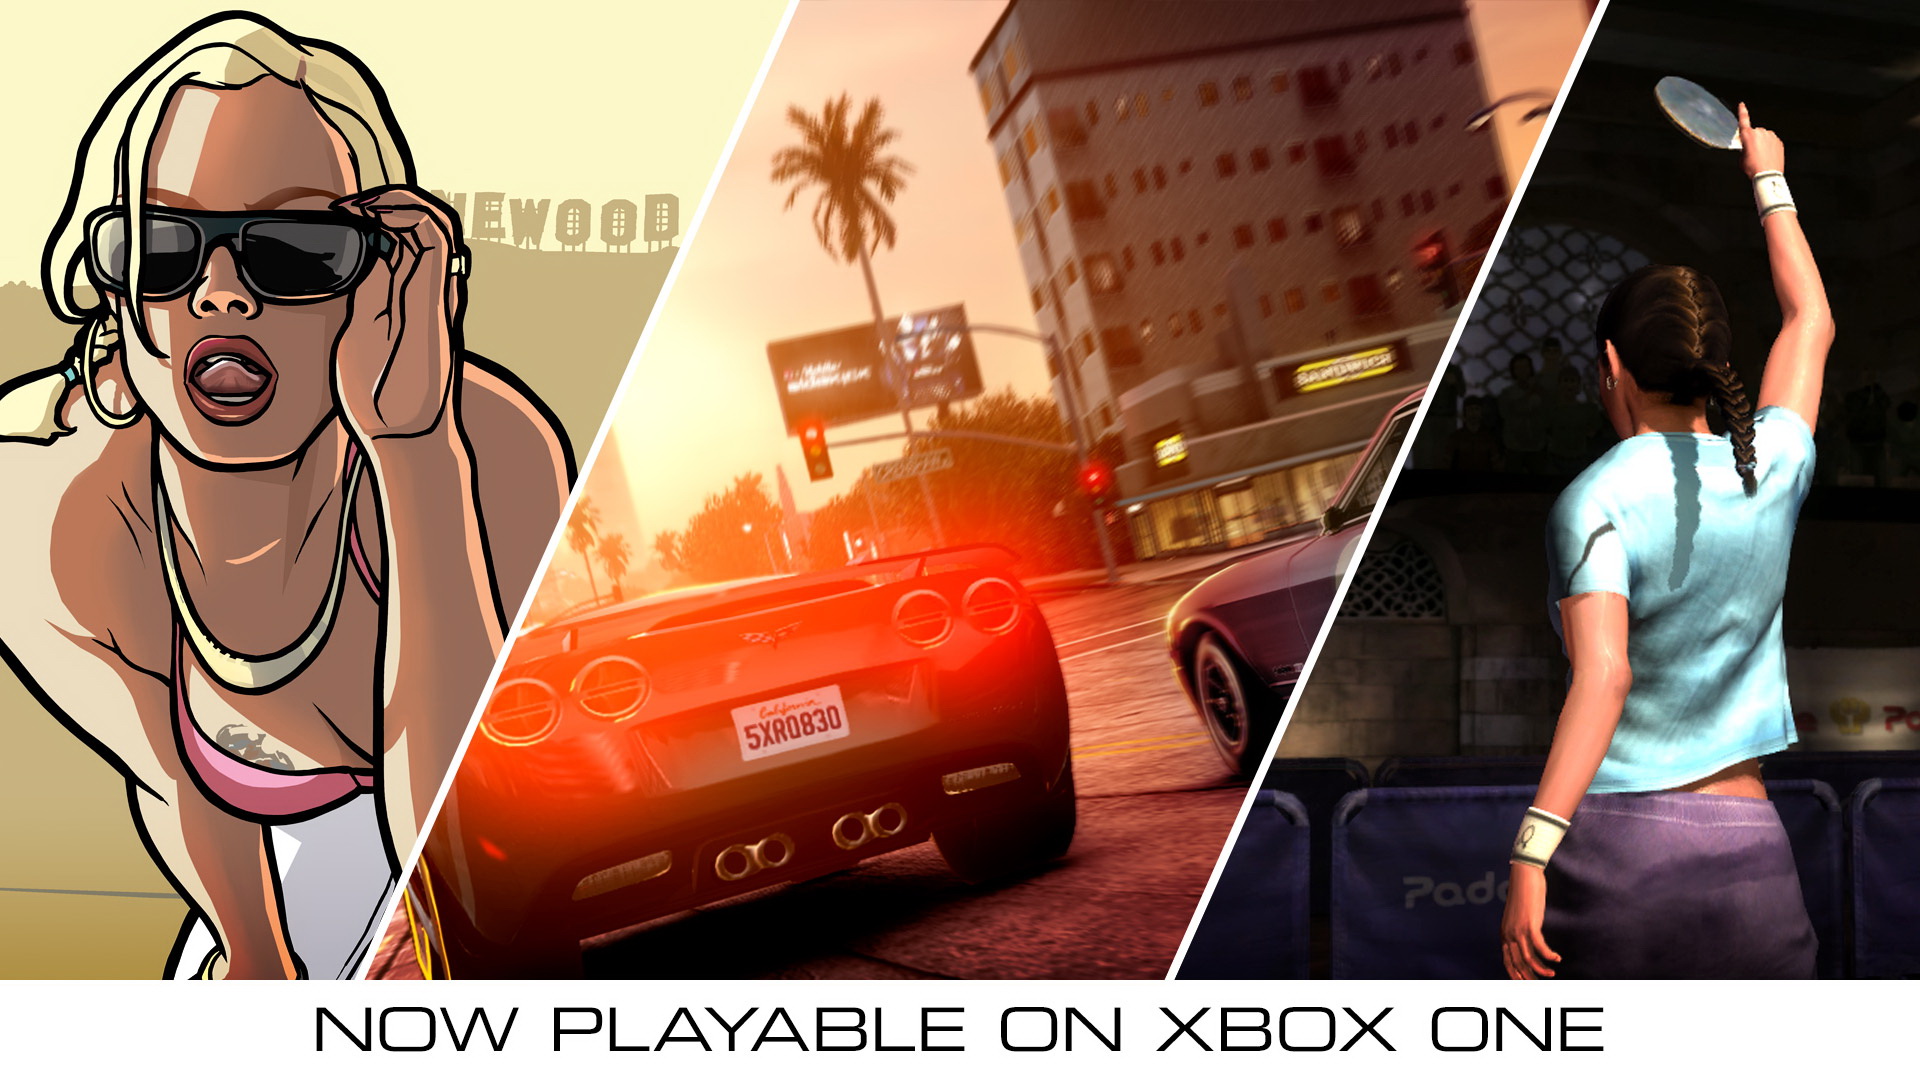 Rockstar lança GTA: San Andreas na Xbox 360